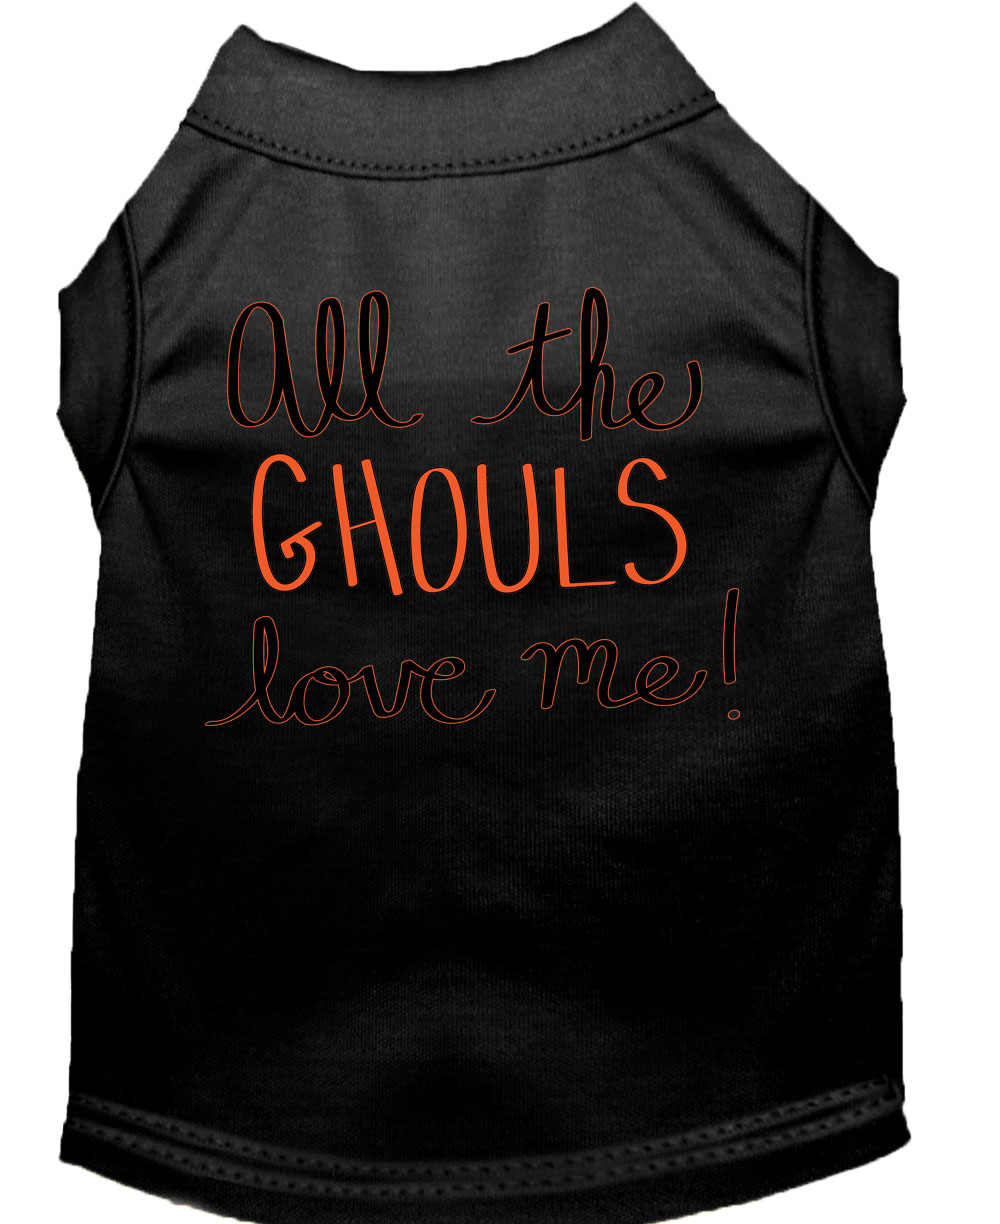 All the Ghouls Screen Print Dog Shirt Black Lg